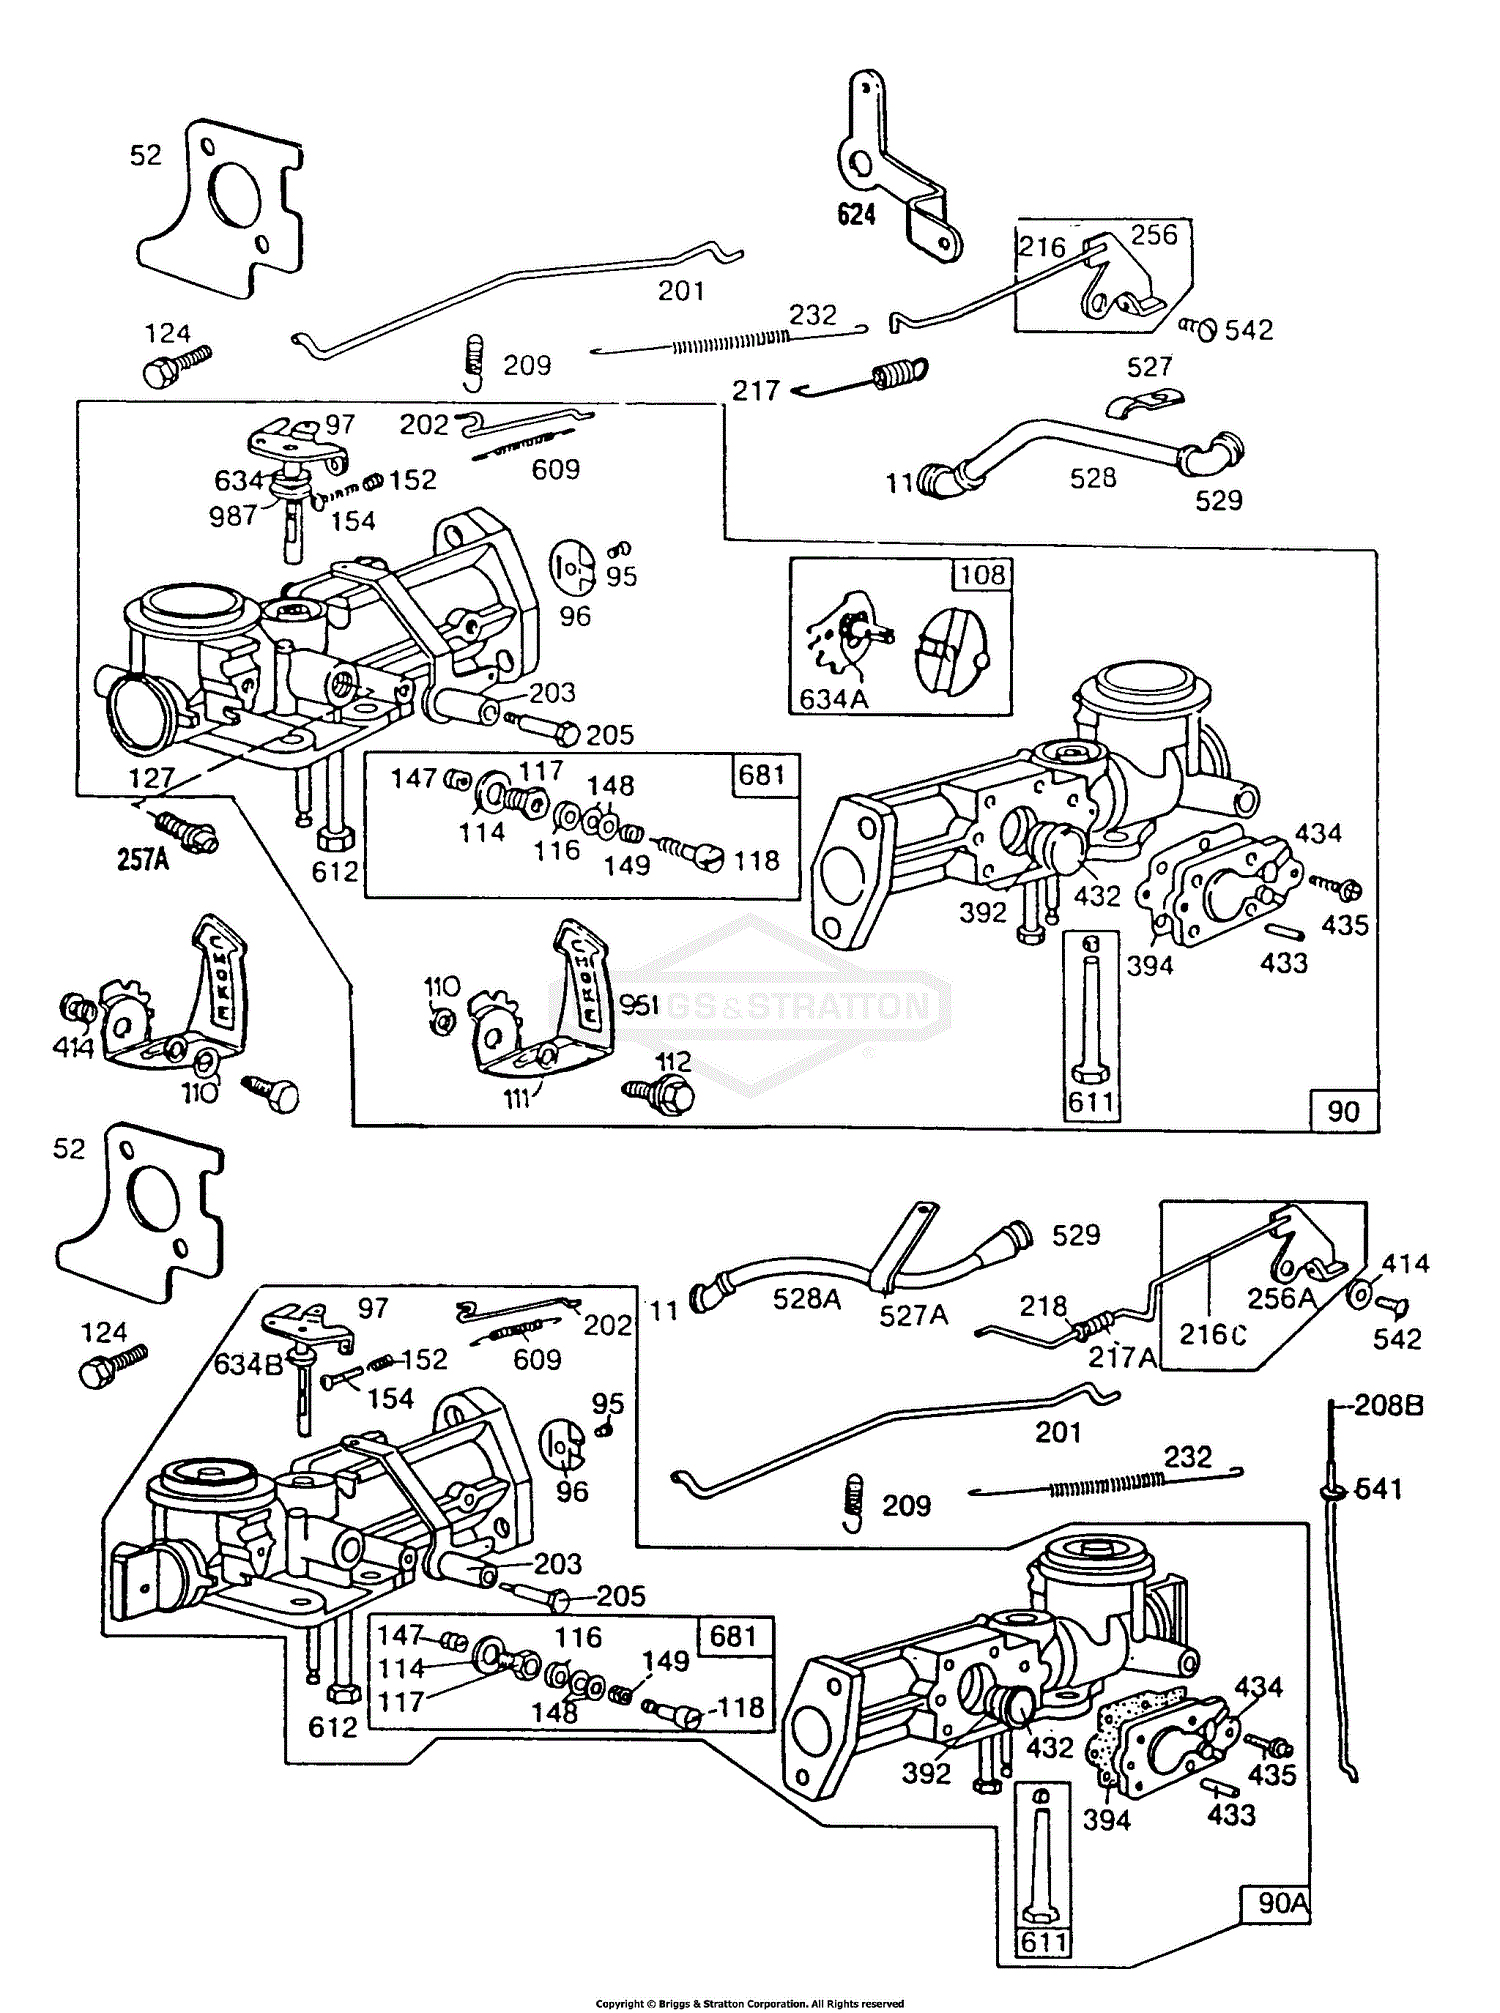 https://az417944.vo.msecnd.net/diagrams/manufacturer/briggs-stratton/briggs-stratton-engine/100000-19z999-series/112200-to-112299/112202-0160-99/carburetor-assemblies/diagram.gif